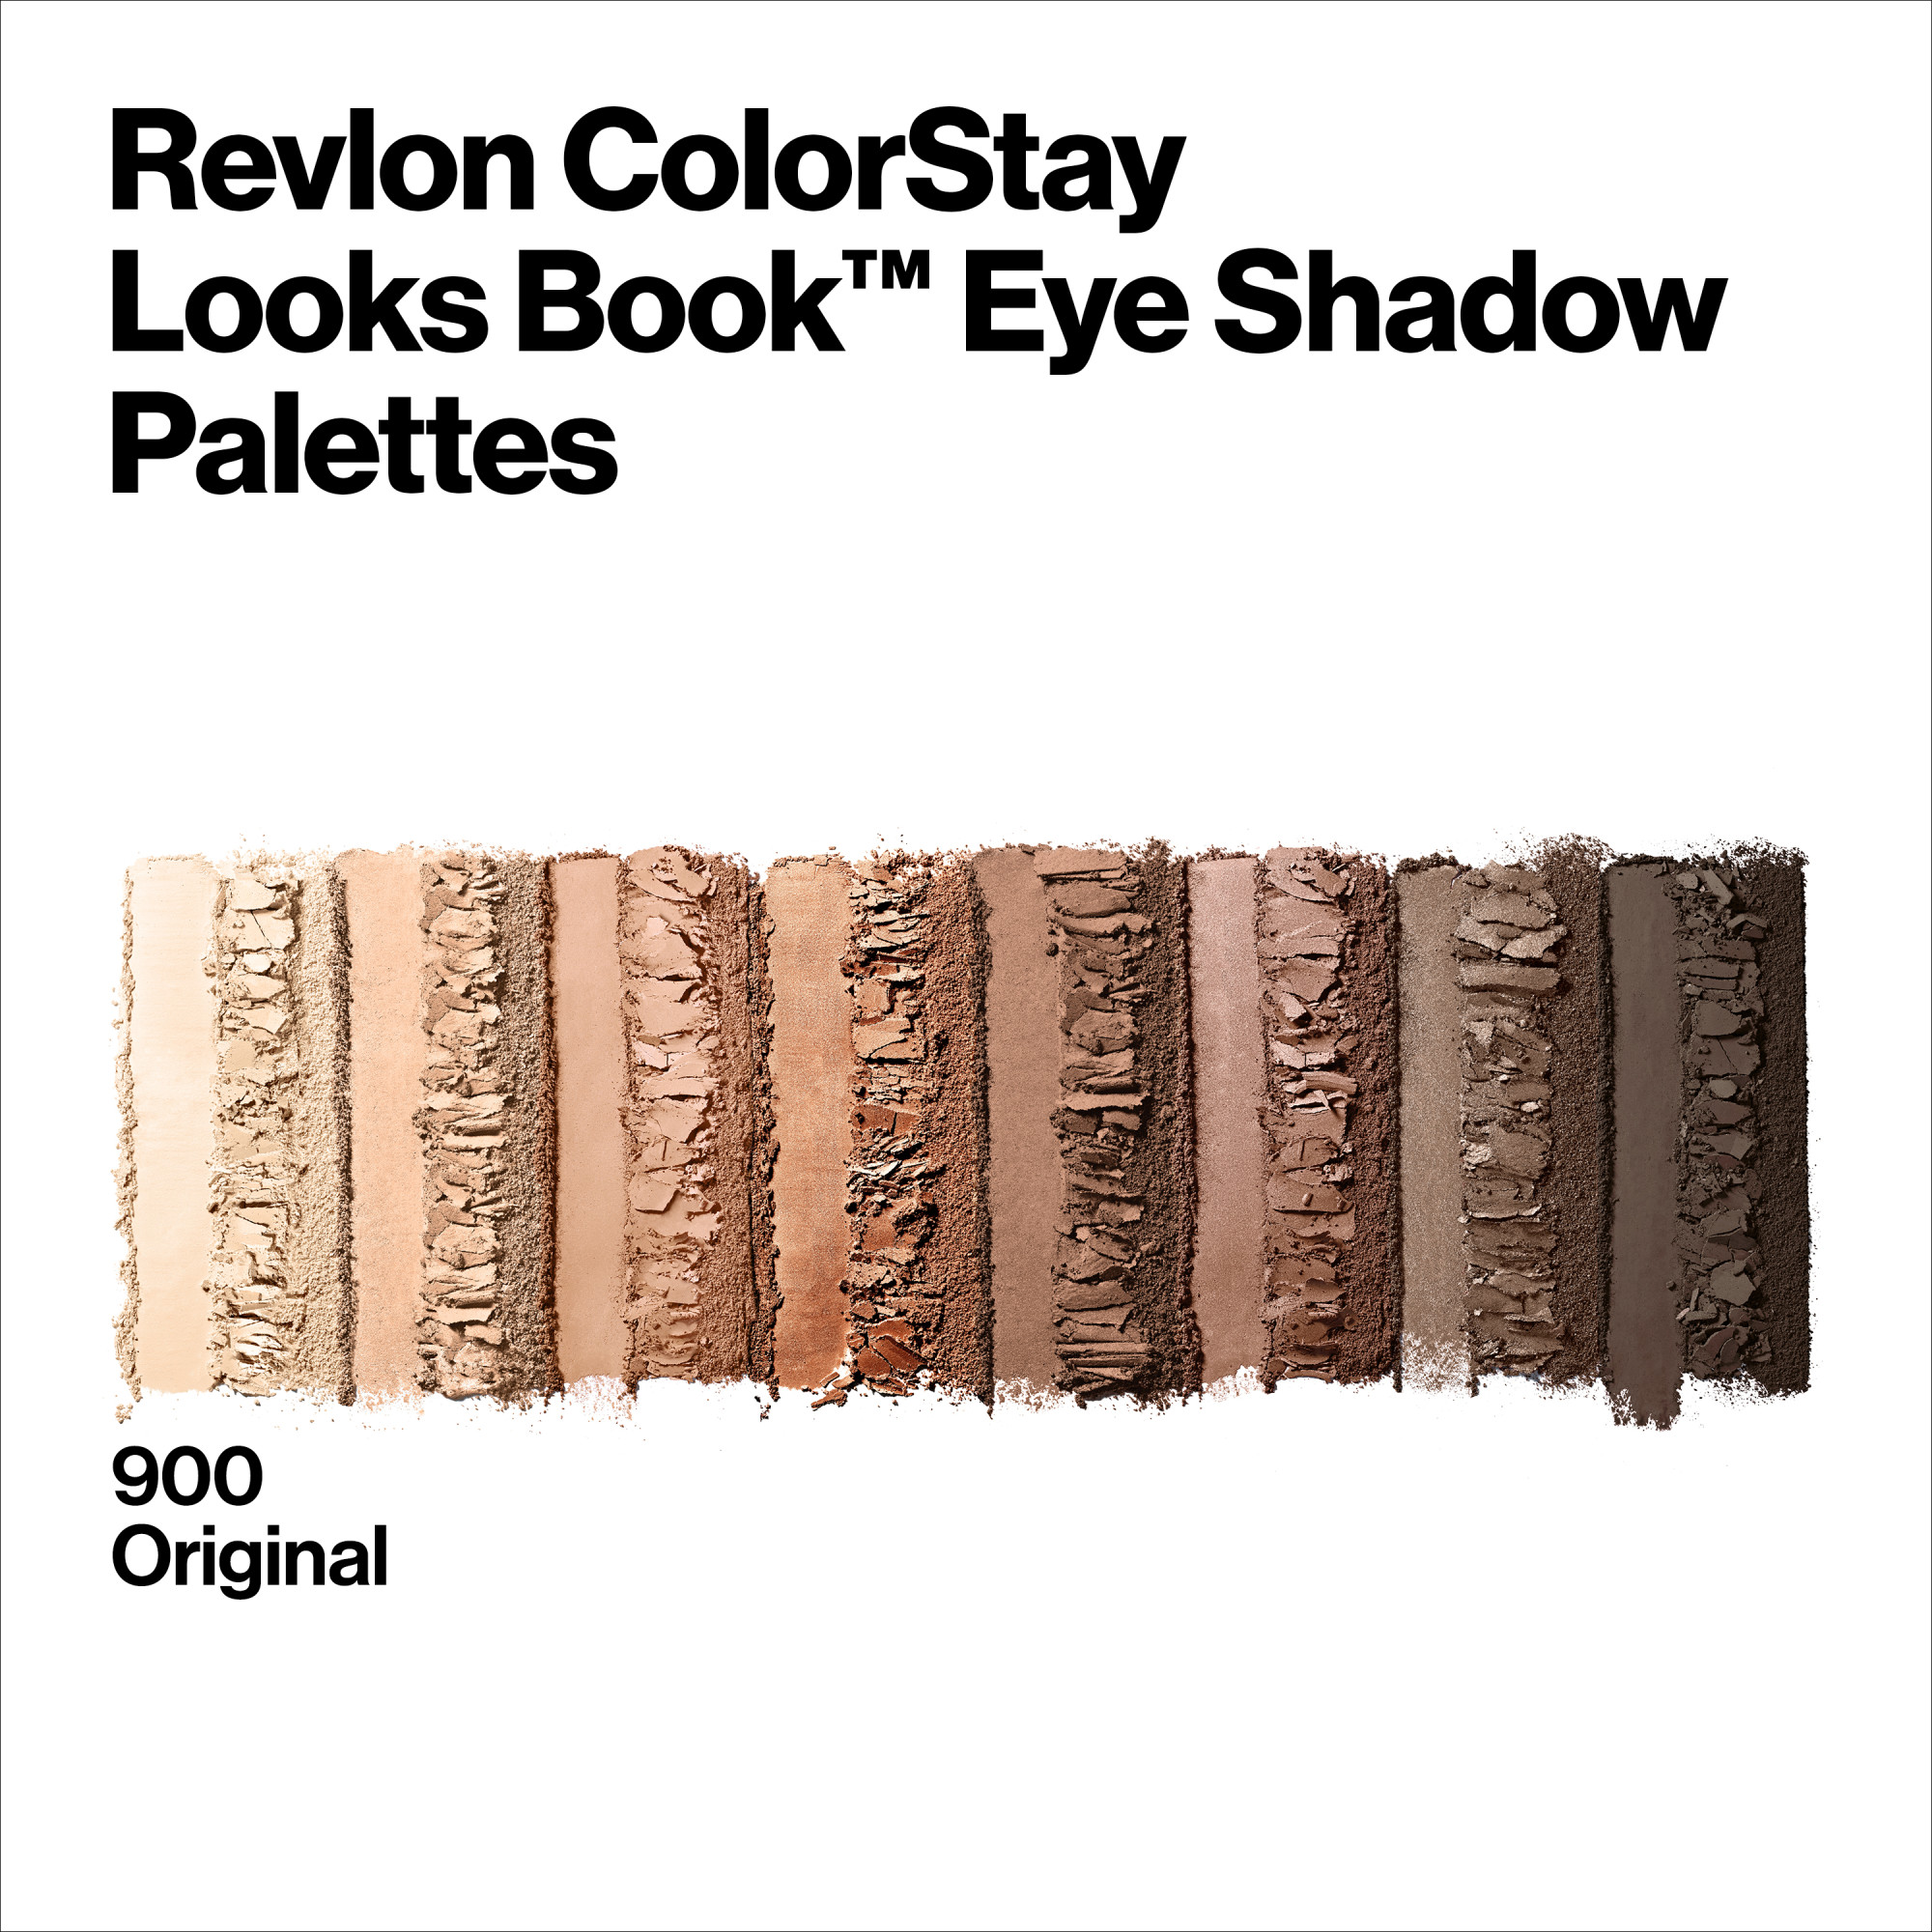 Revlon ColorStay Looks Book Eye Shadow Palette, 900 Original, 0.12 oz - image 3 of 8